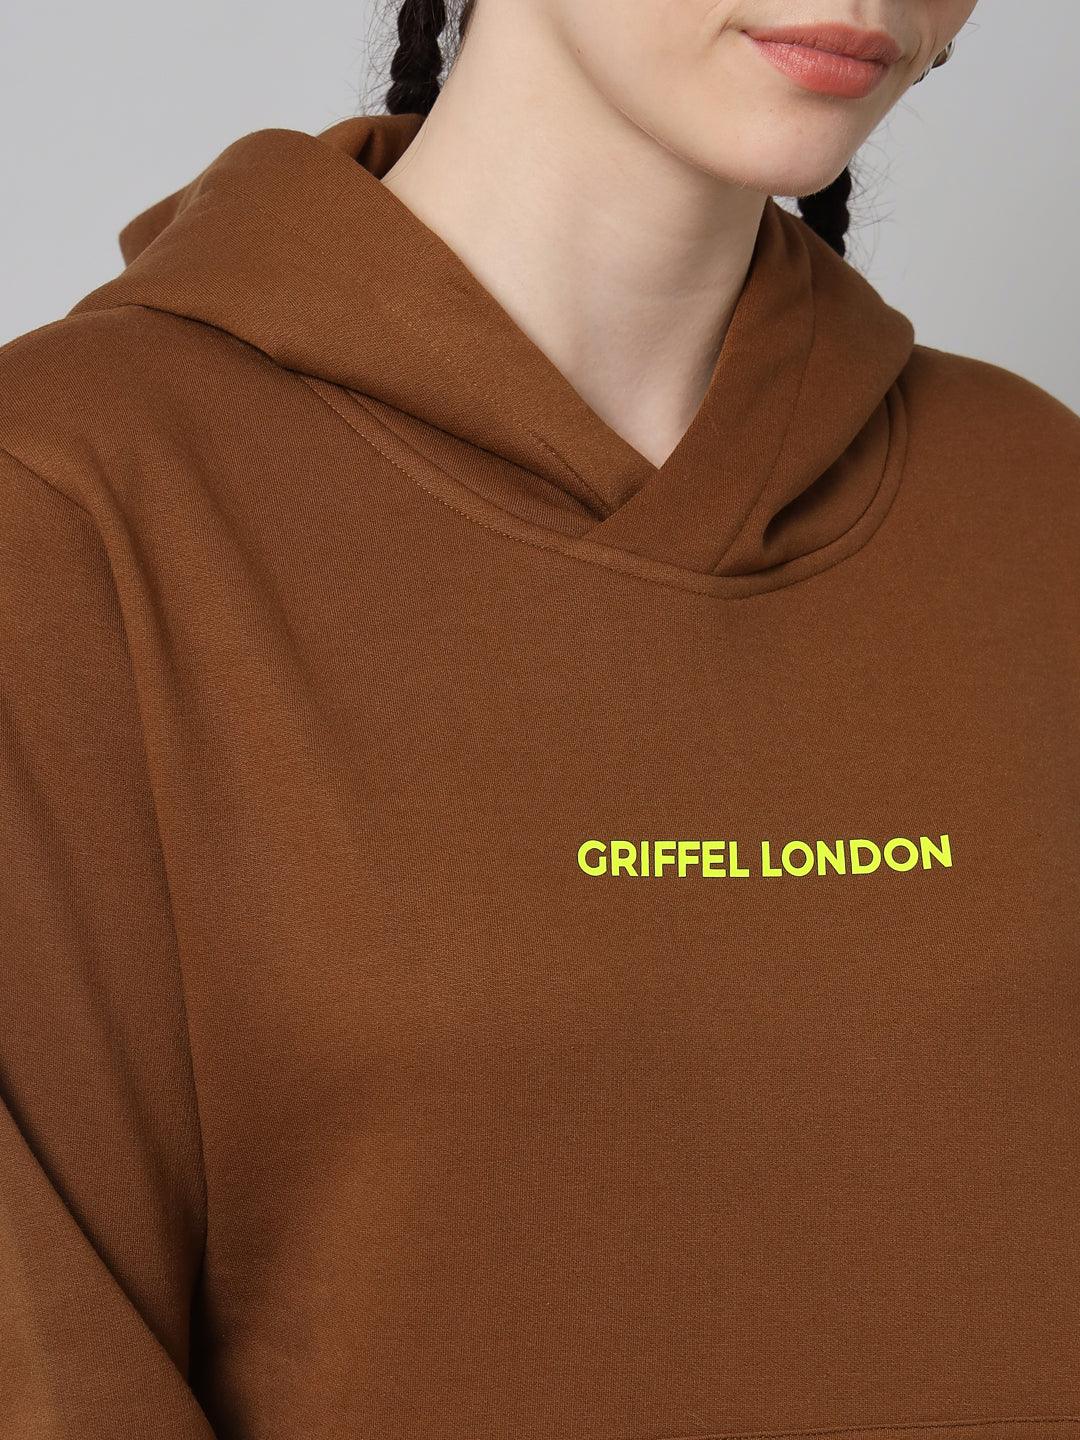 Griffel Women’s Cotton Fleece Full Sleeve Coffee Hoodie Sweatshirt - griffel